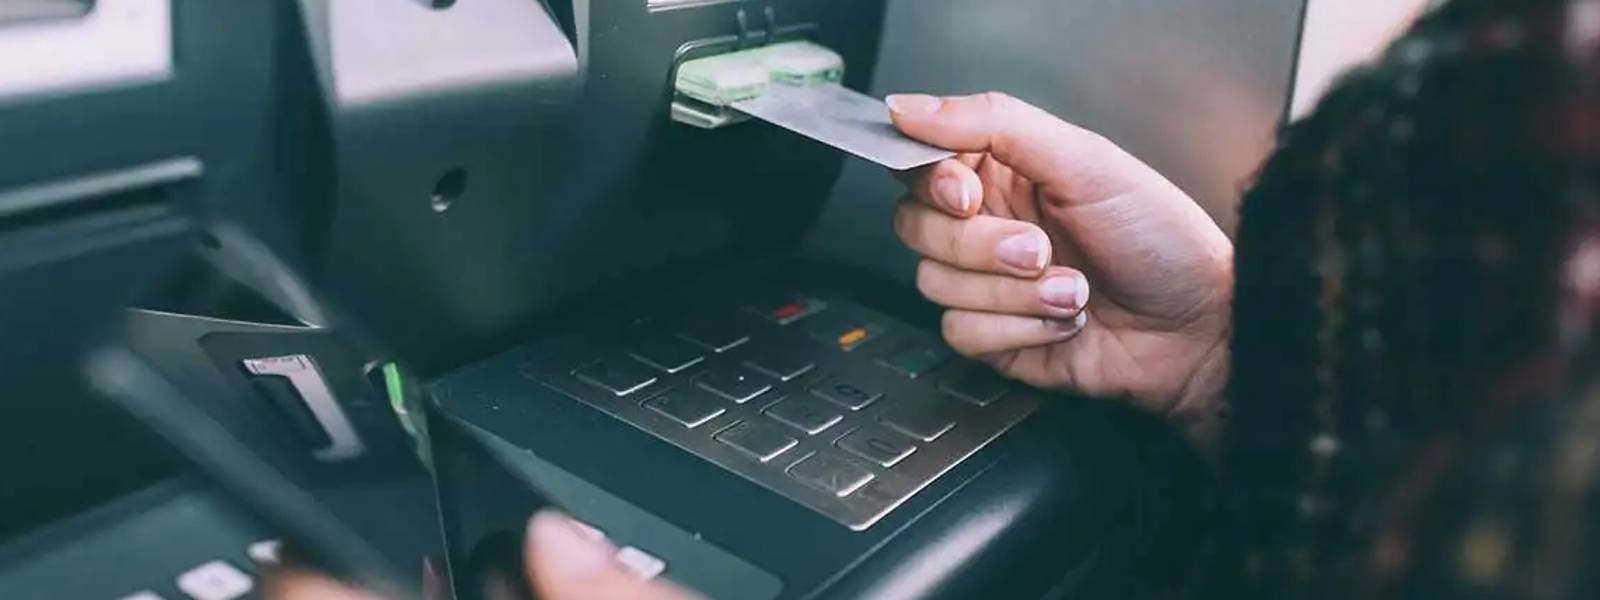 Over Rs.10.6 million stolen from ATMs in Sri Lanka